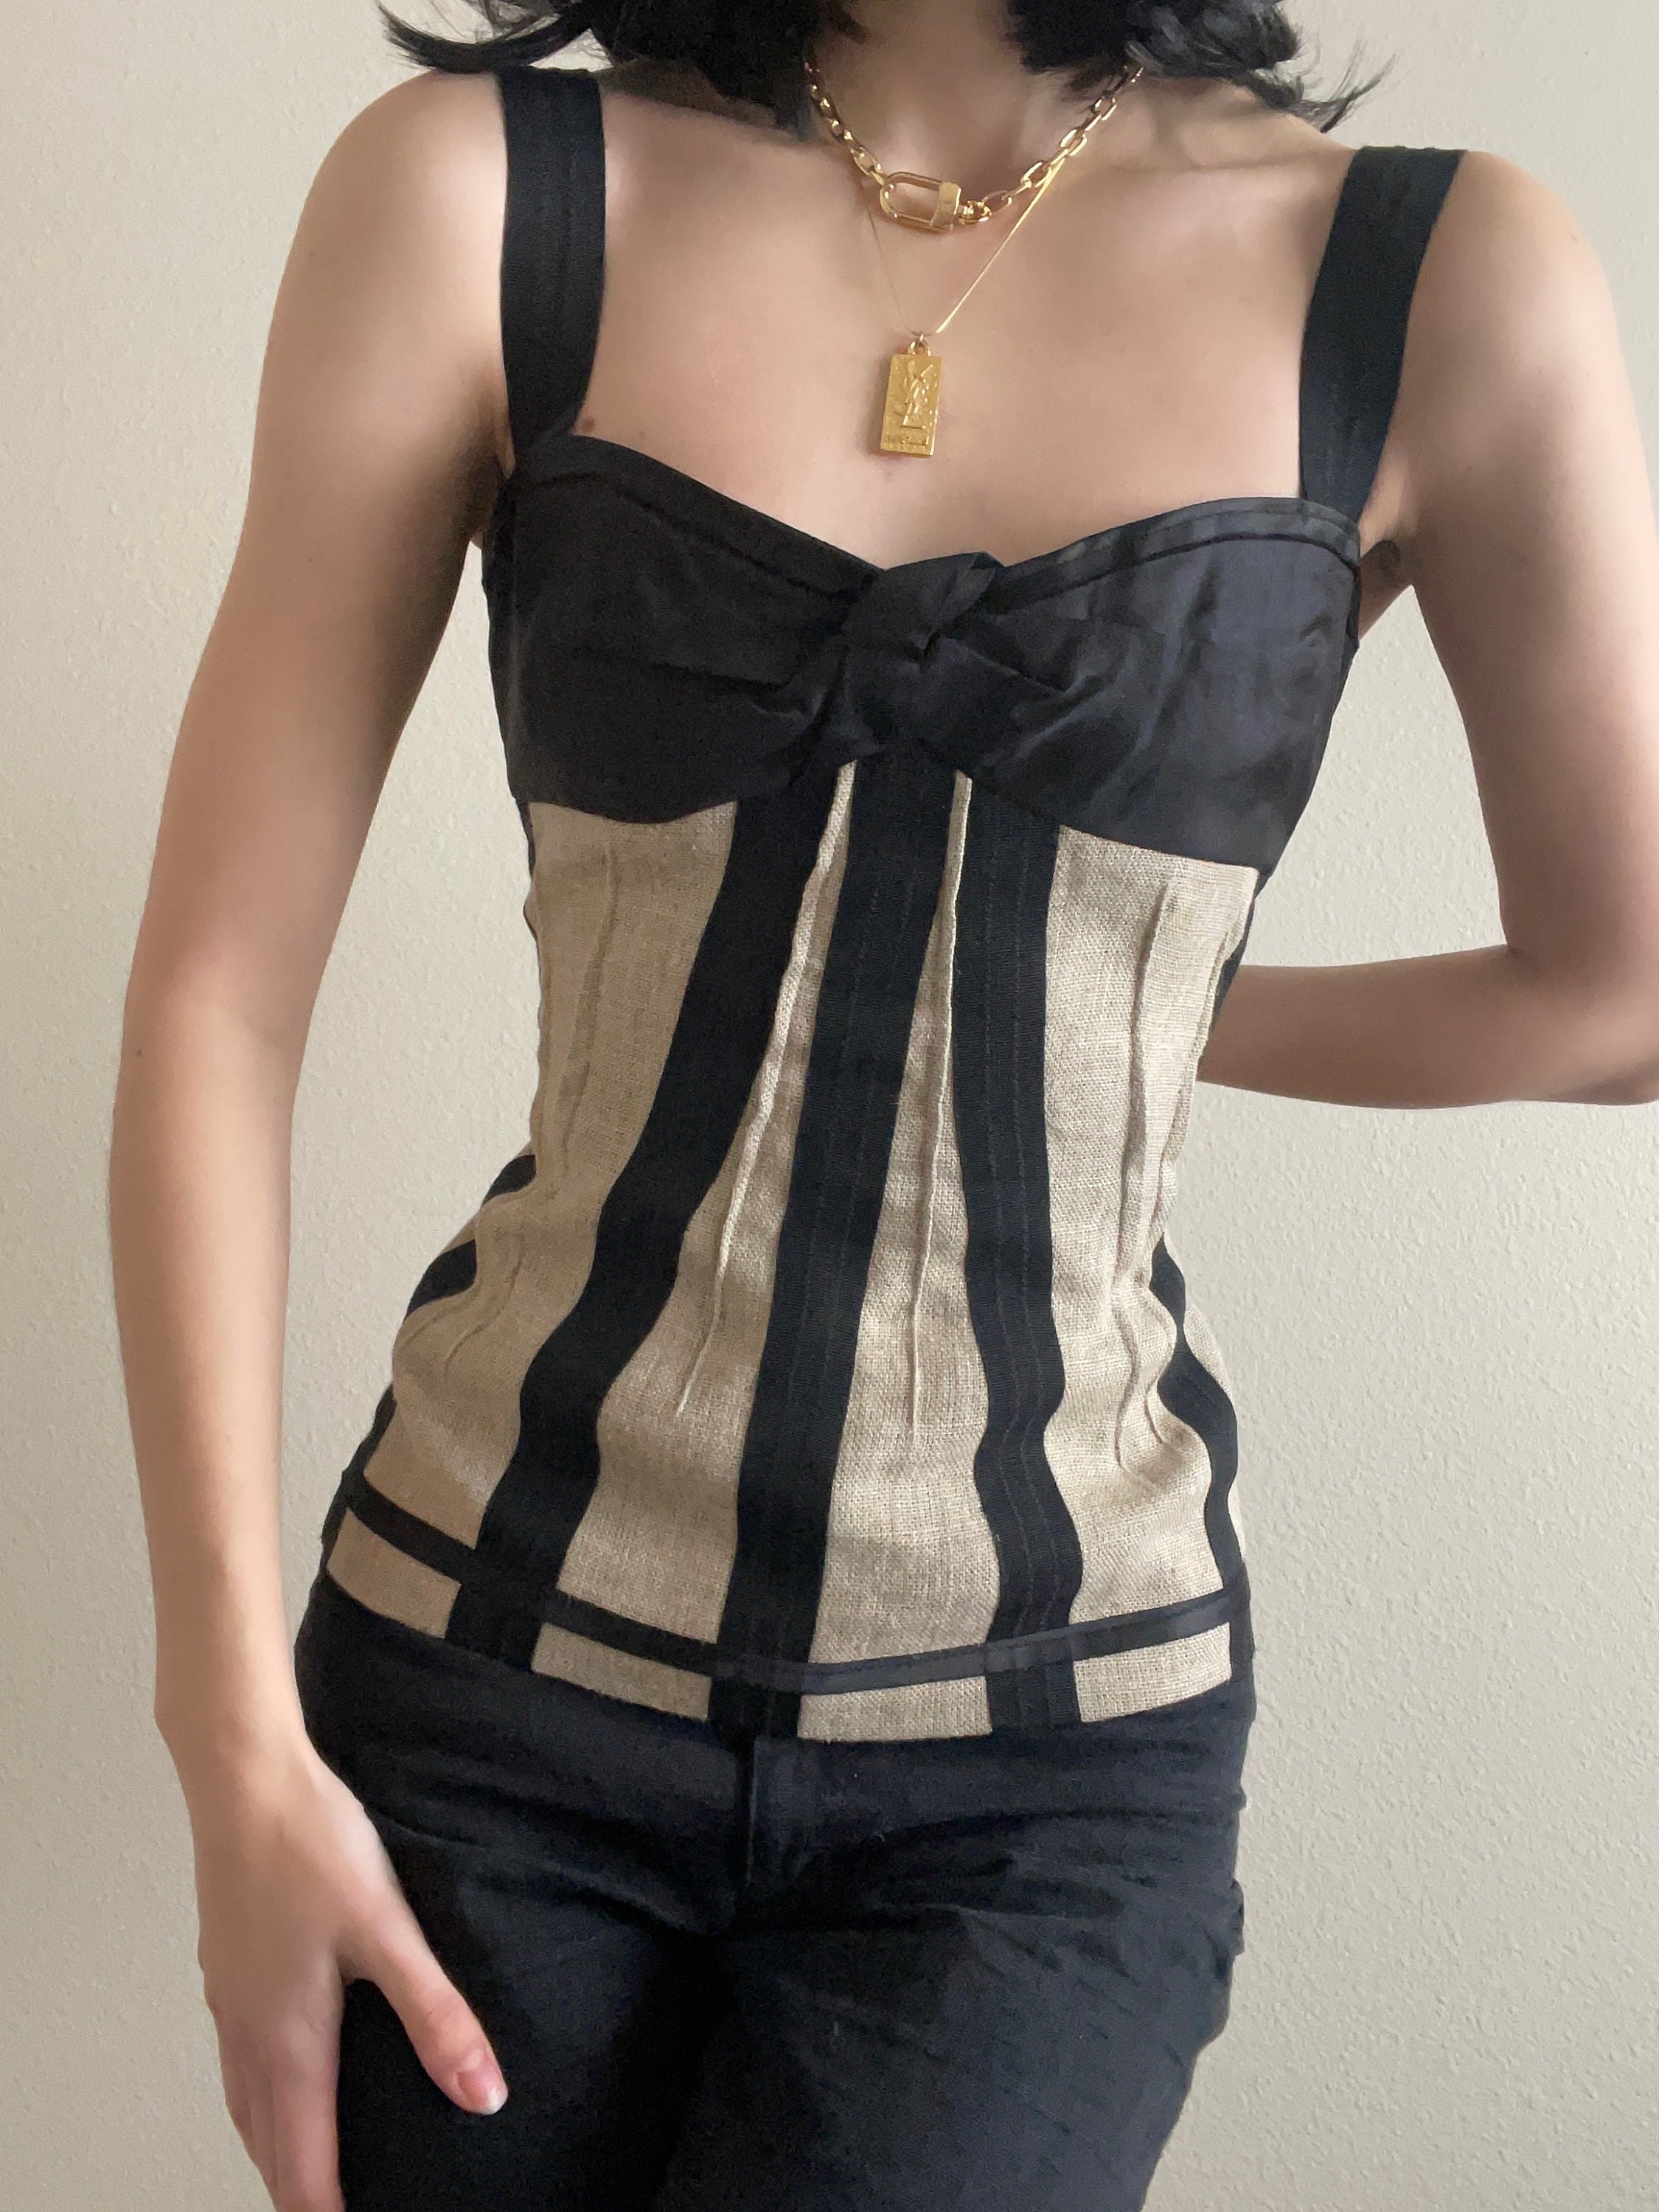 Vintage Chantal Thomas corral black ruffled bra thong lingerie set